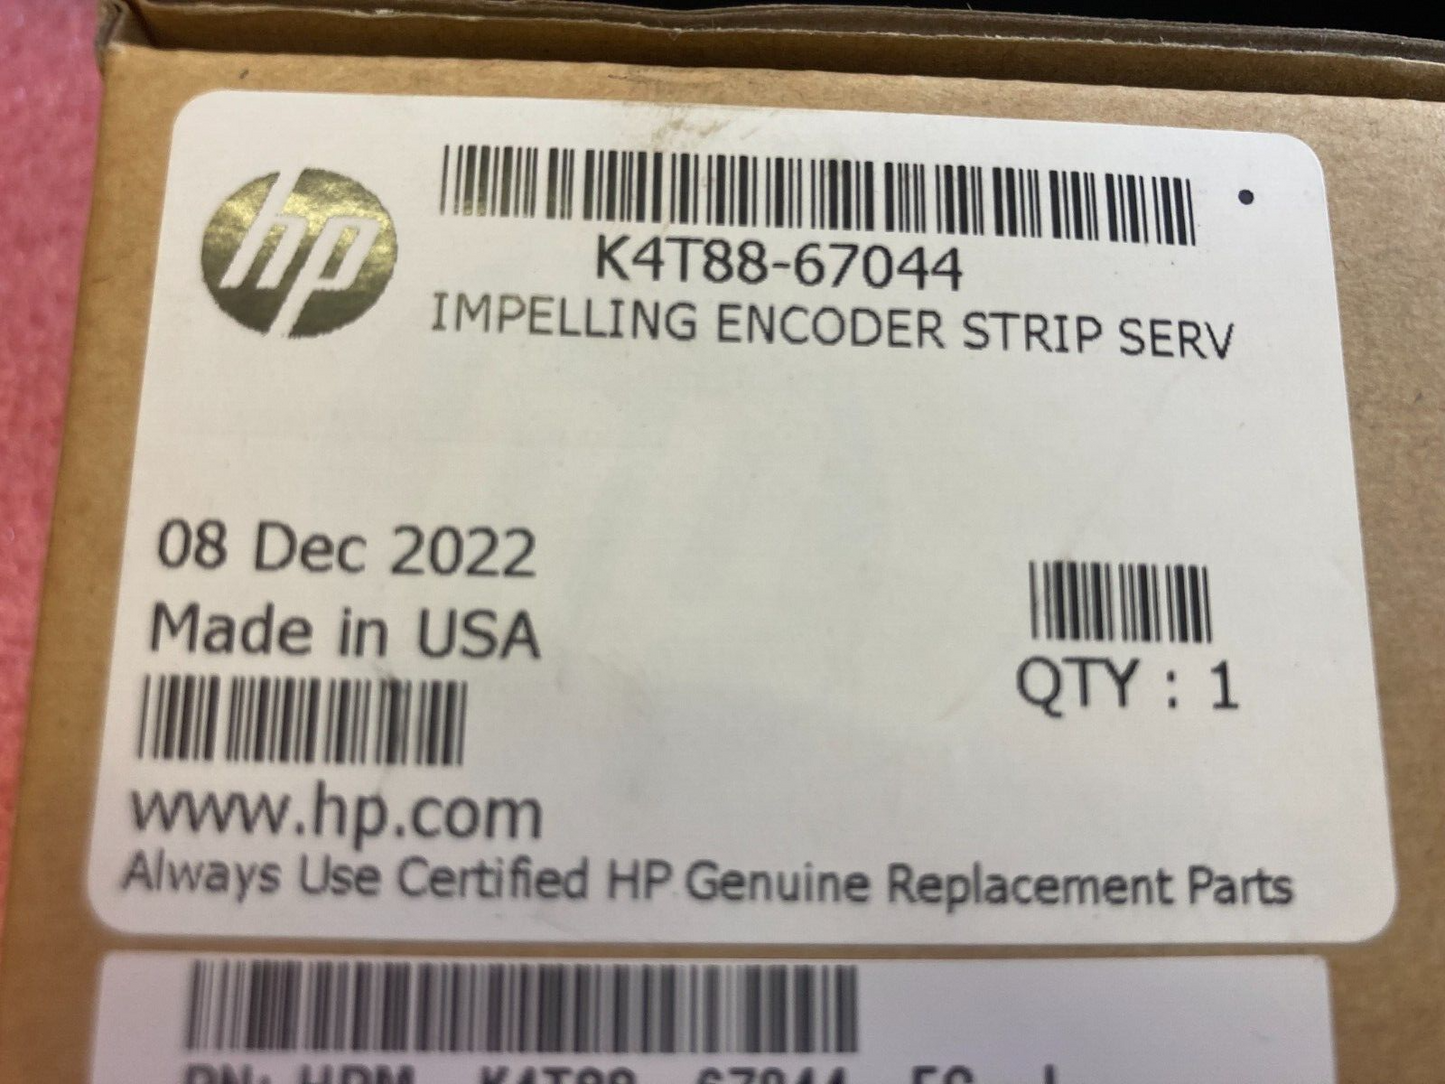 NEW HP K4T88-67044 IDS IMPELLING ENCODER STRIP LATEX 1500